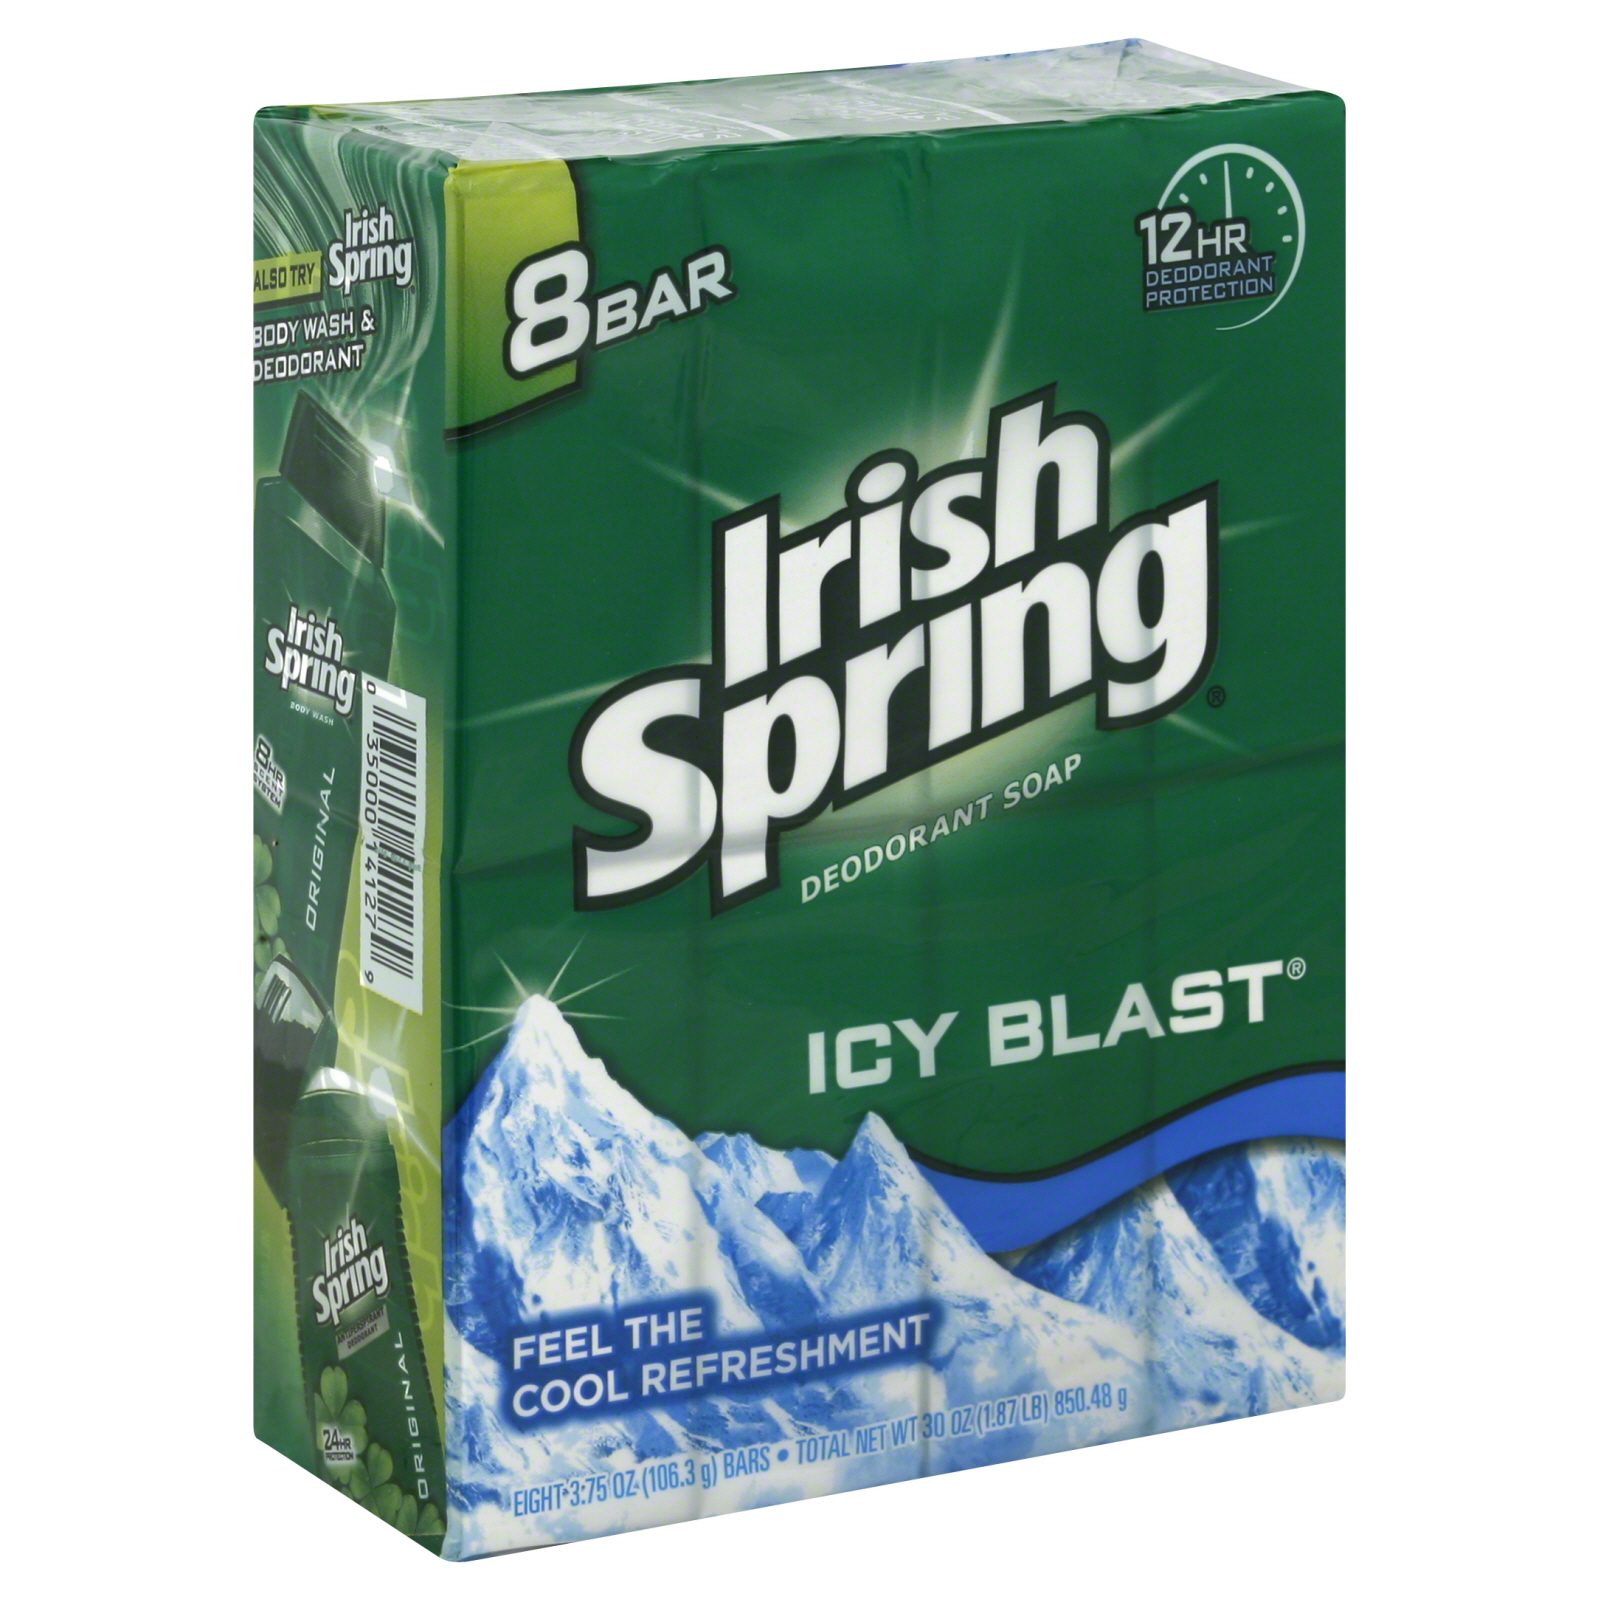 Irish Spring Deodorant Soap, IcyBlast, Value Pack, 8 - 4 oz (113 g) bars [32 oz (2 lb) 907 g]